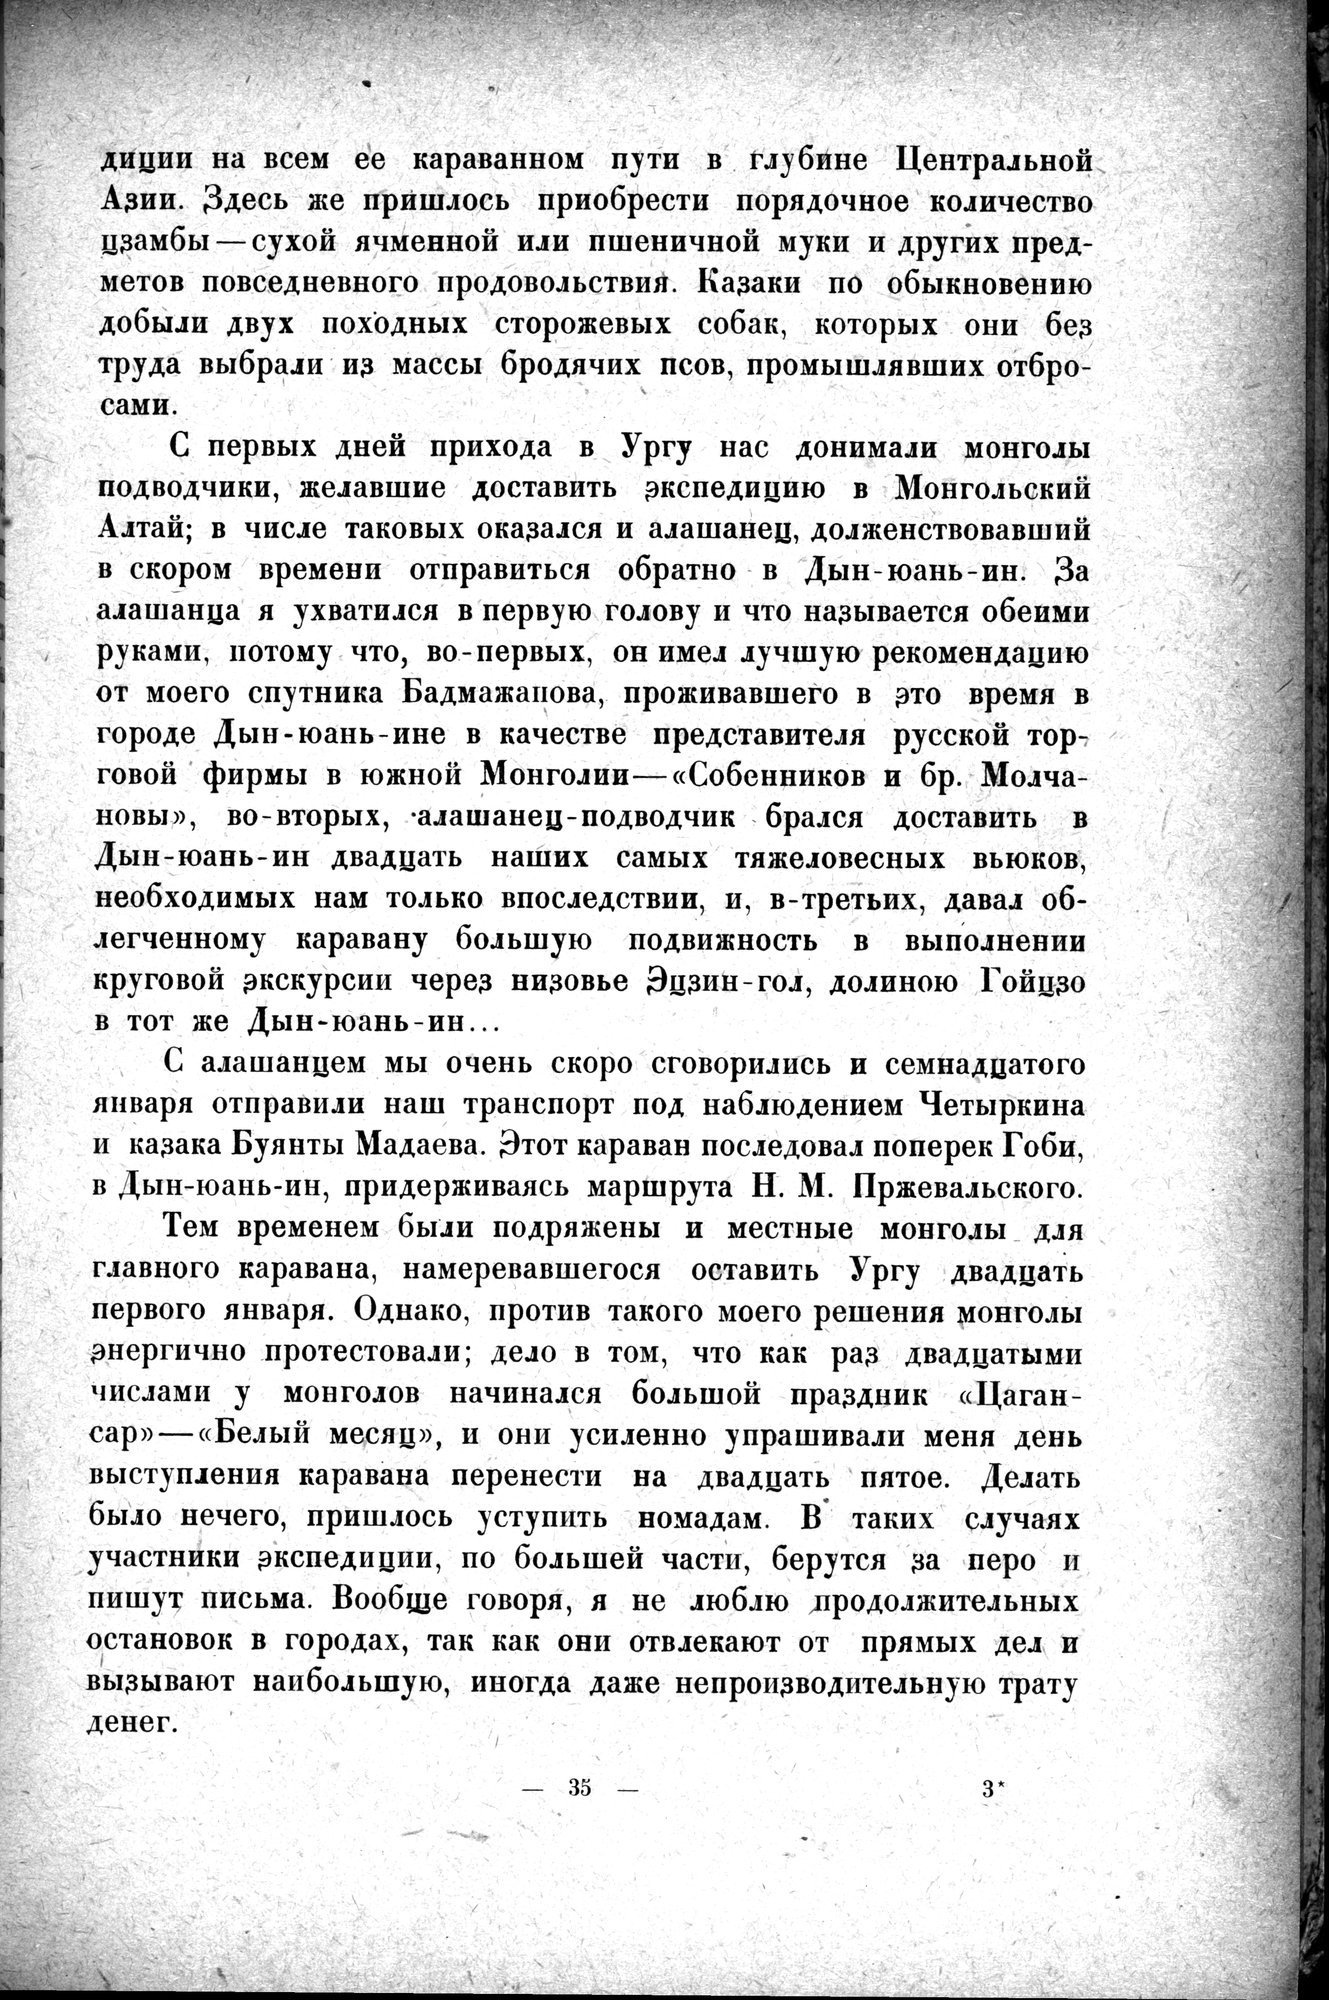 Mongoliya i Amdo i mertby gorod Khara-Khoto : vol.1 / Page 55 (Grayscale High Resolution Image)